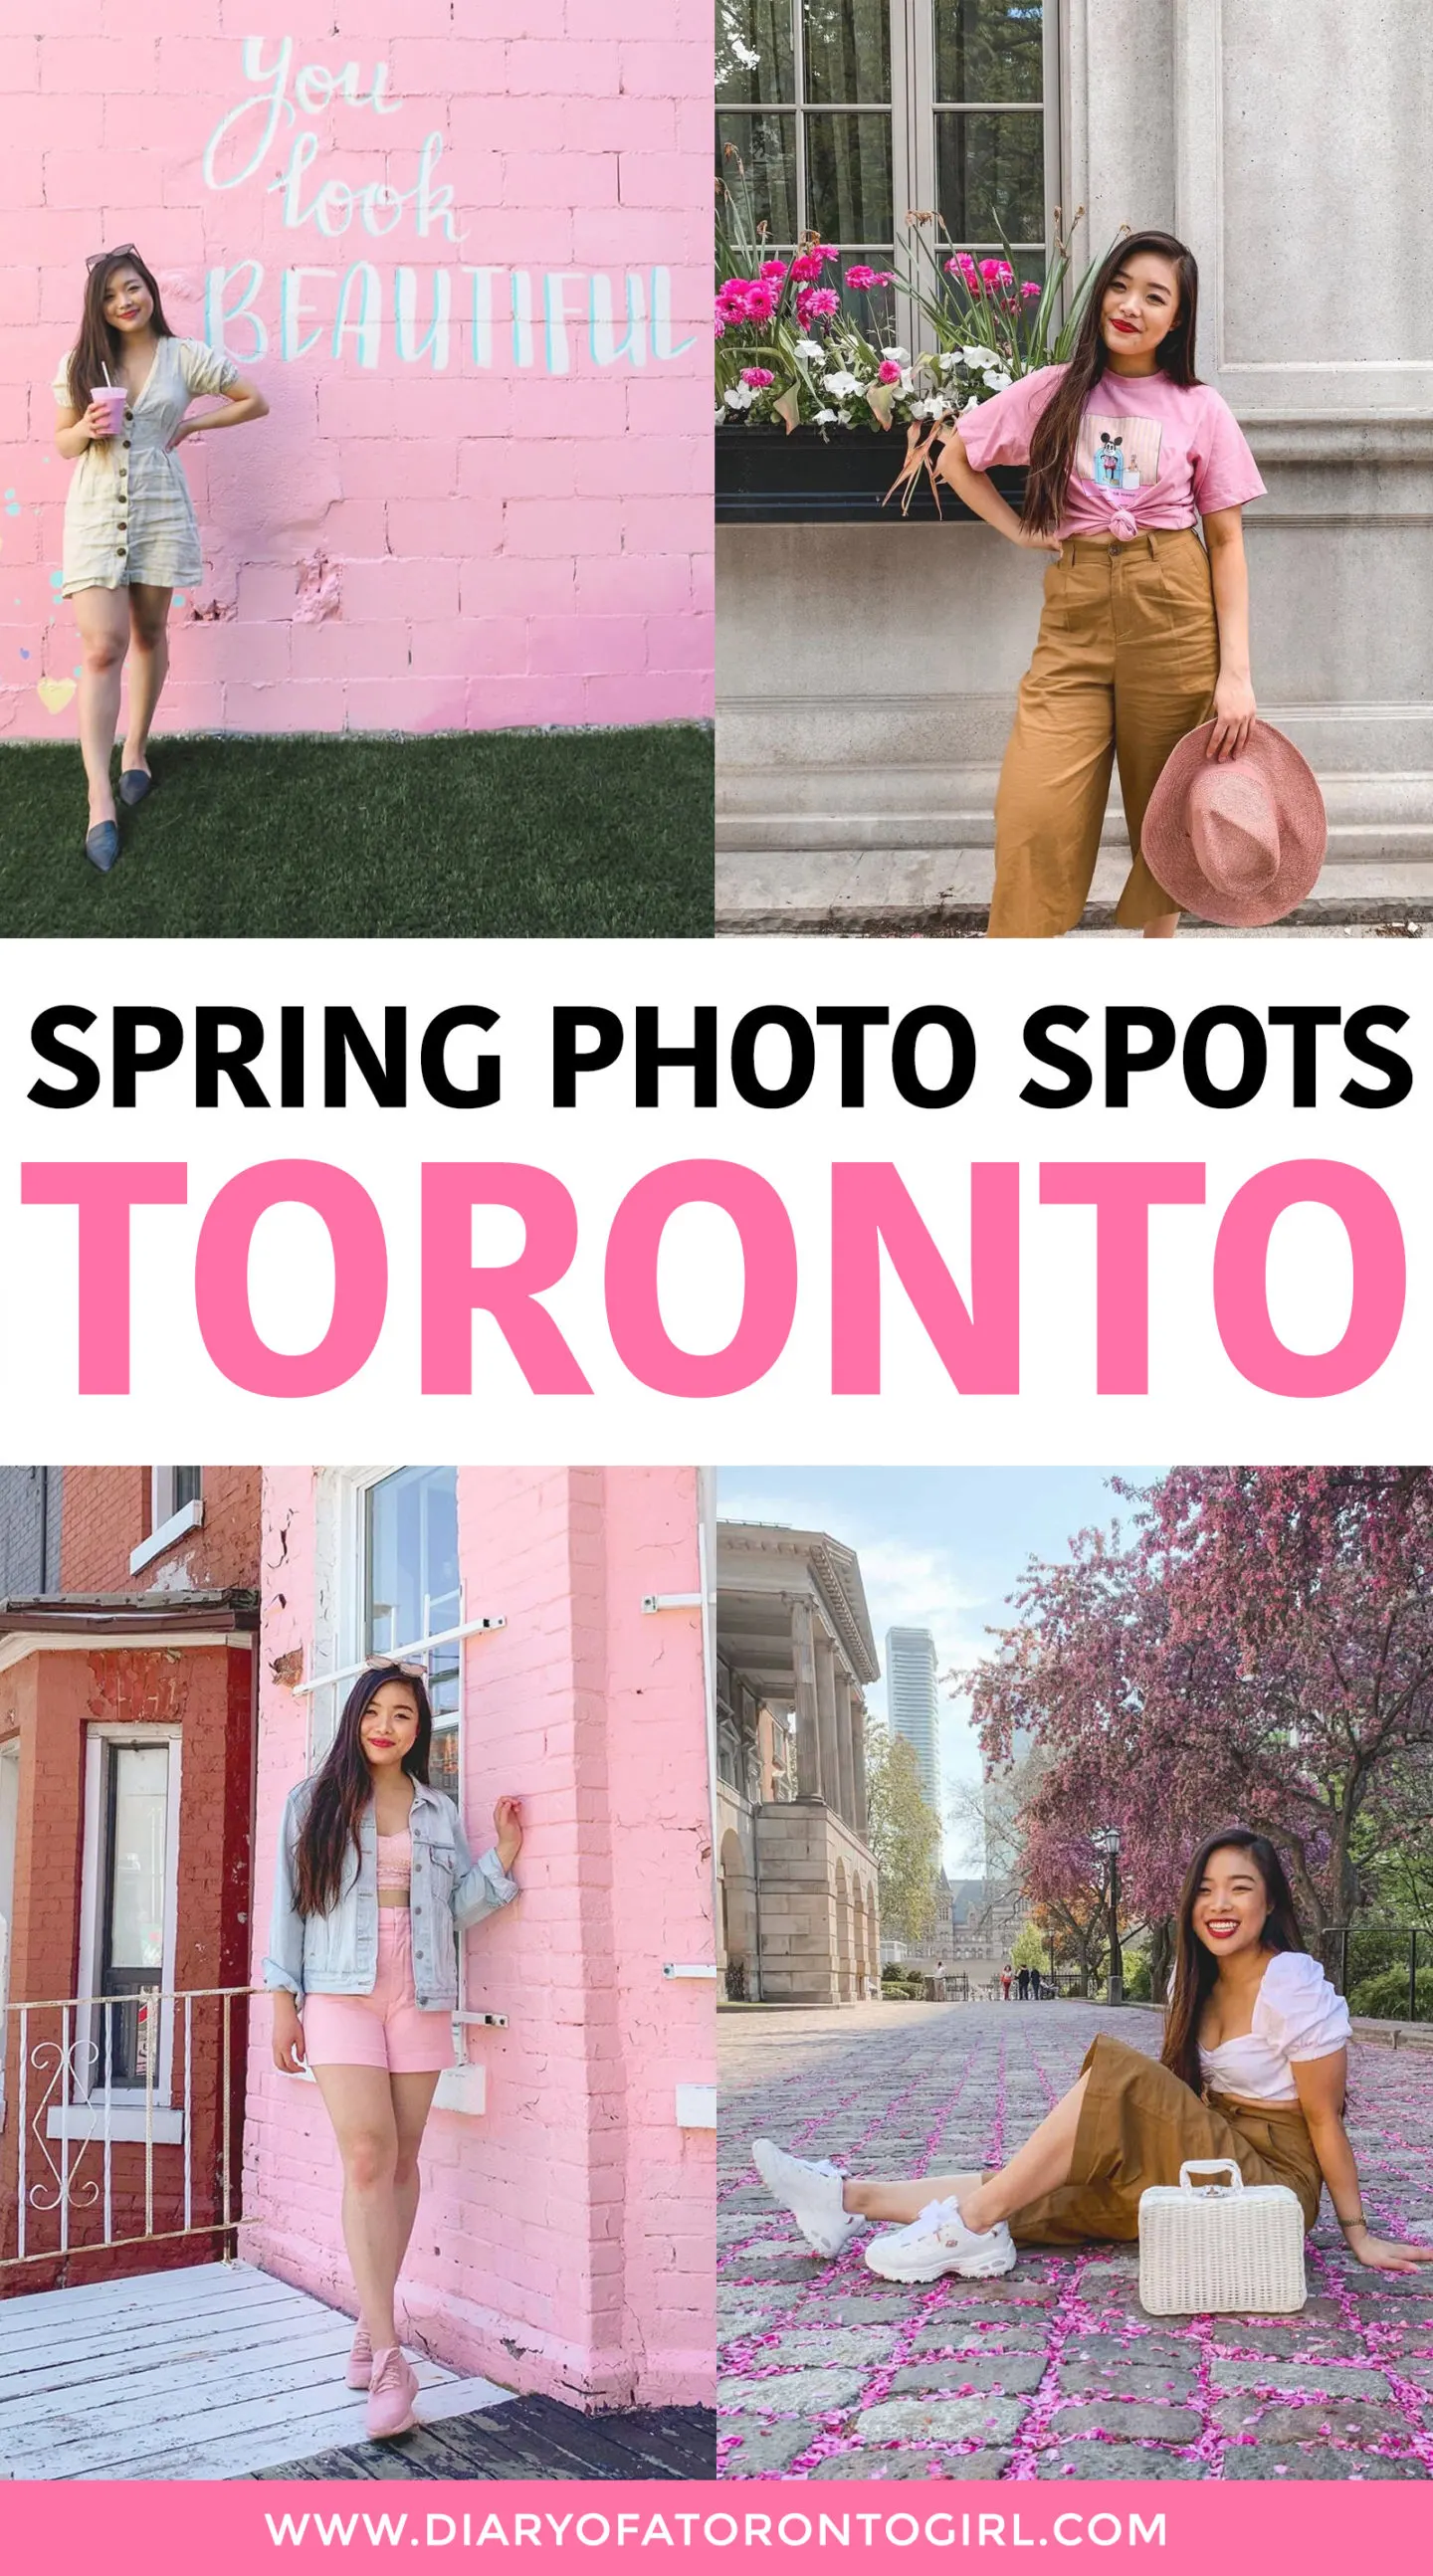 Cute spring photo spots in Toronto